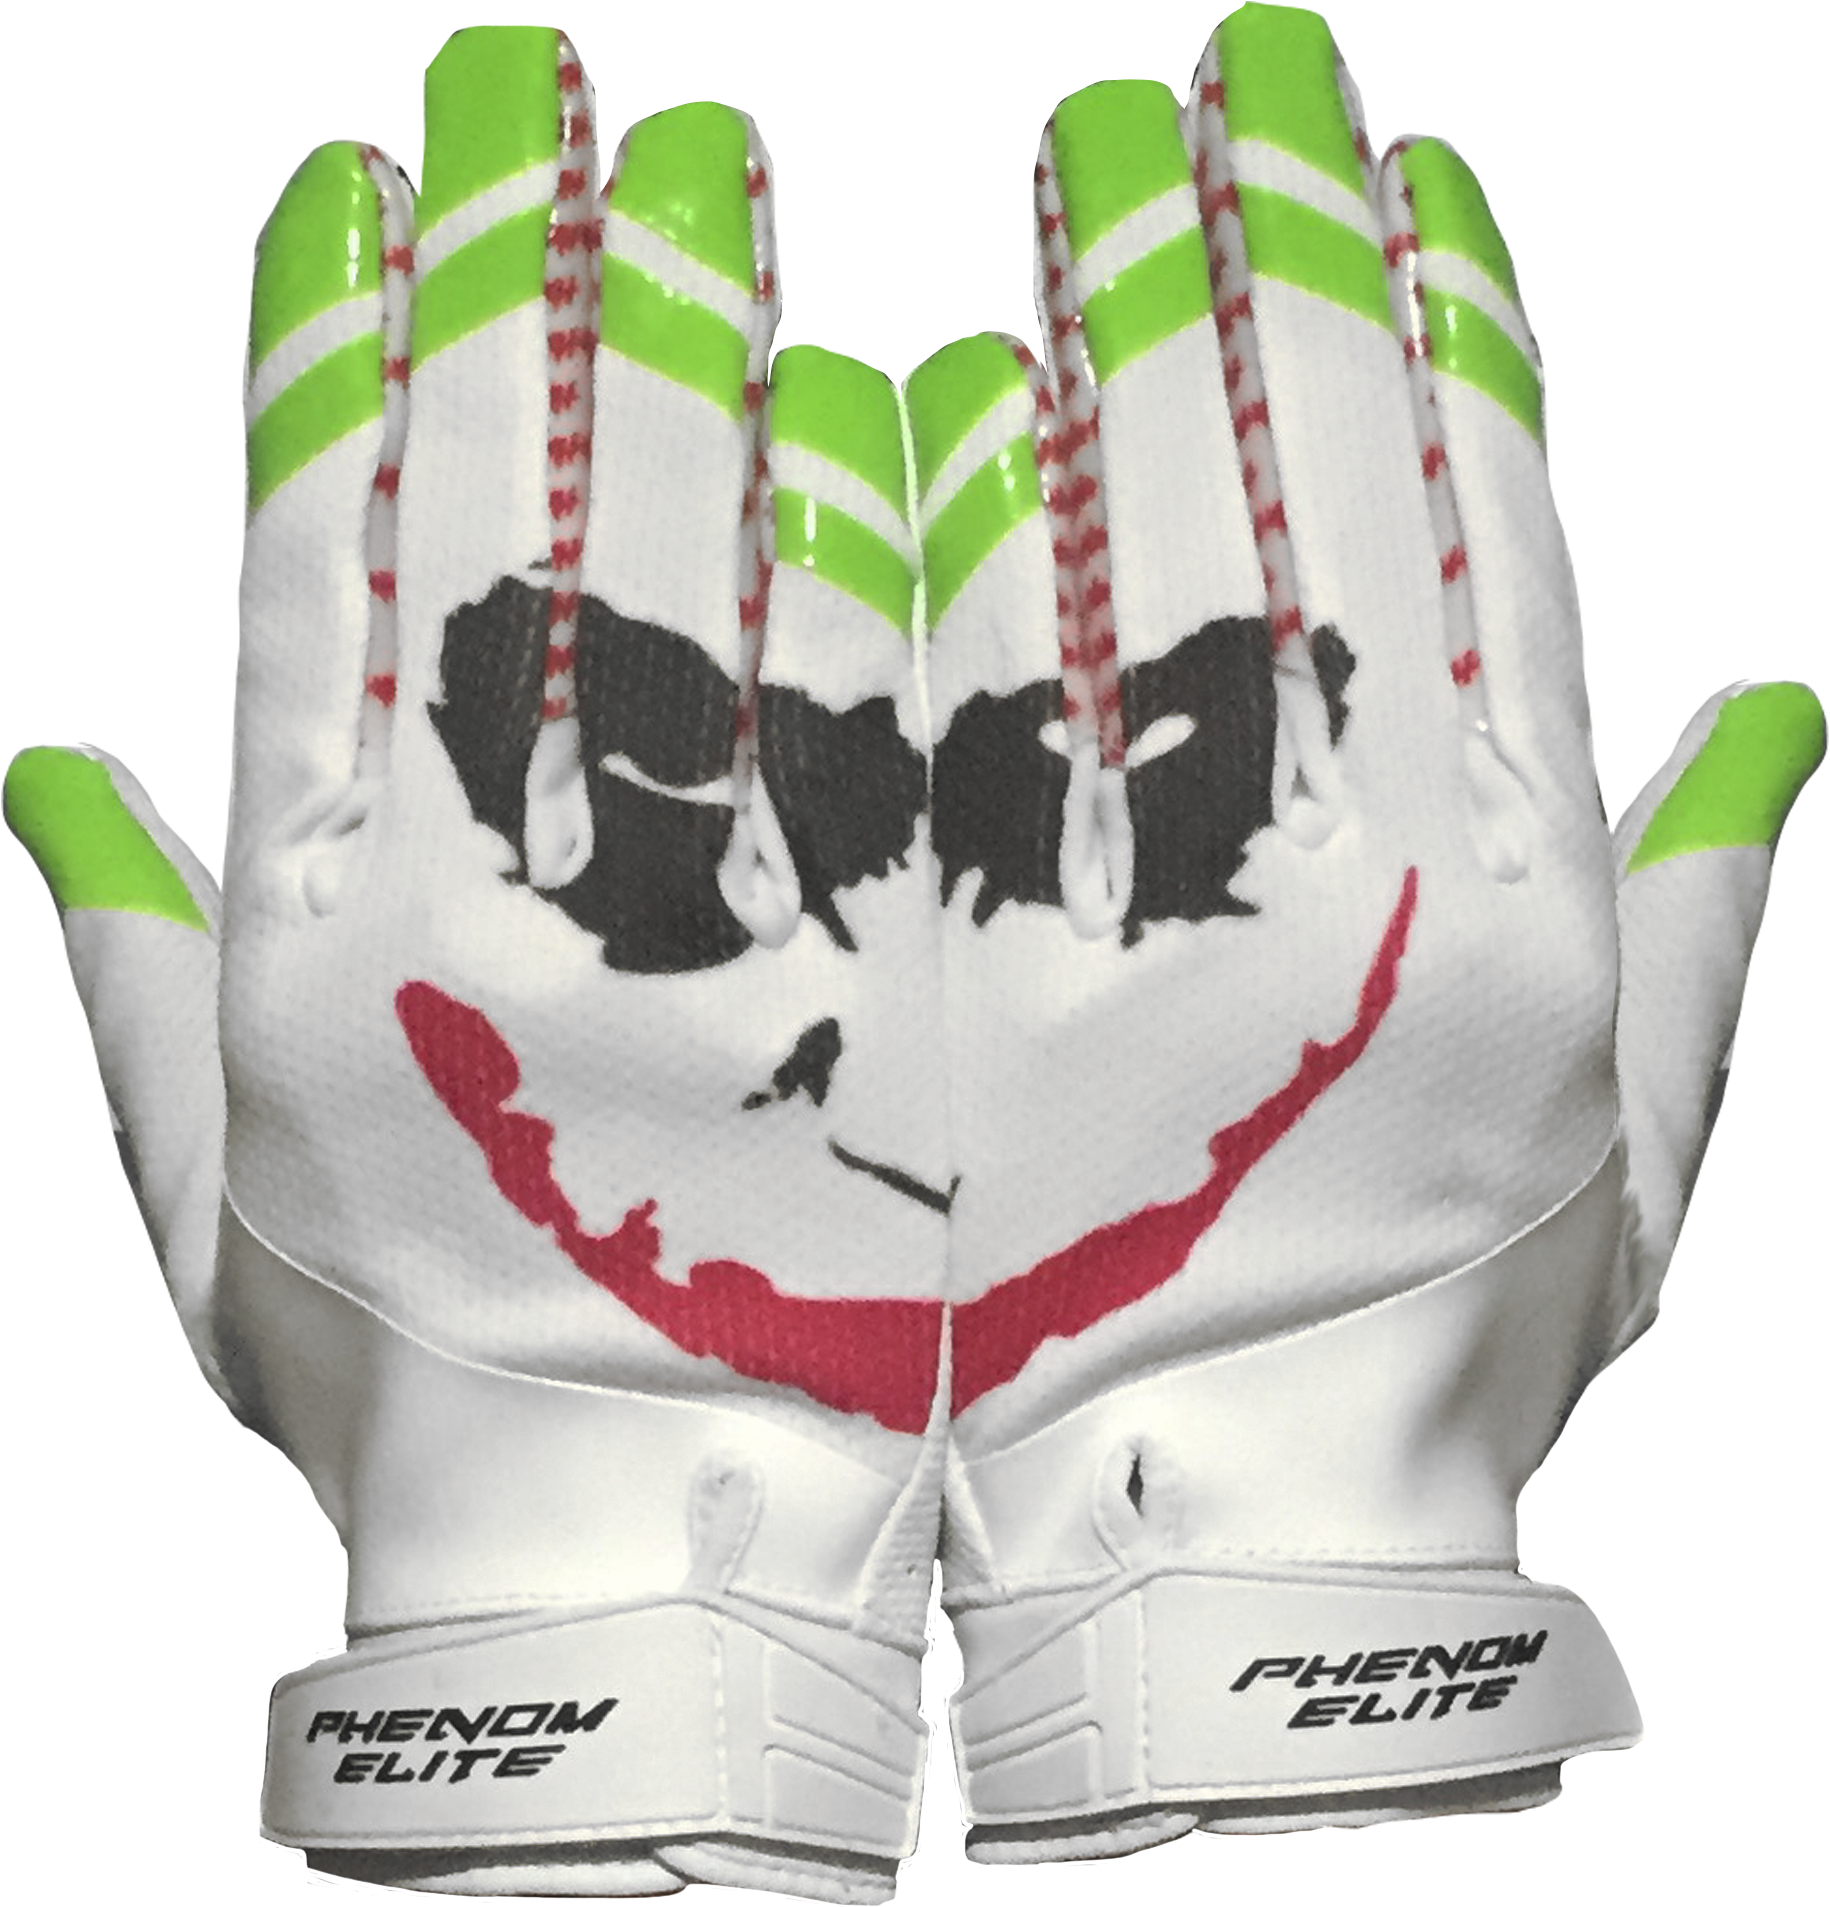 Why So Serious - Phenom Elite Joker Gloves (2270x2109), Png Download